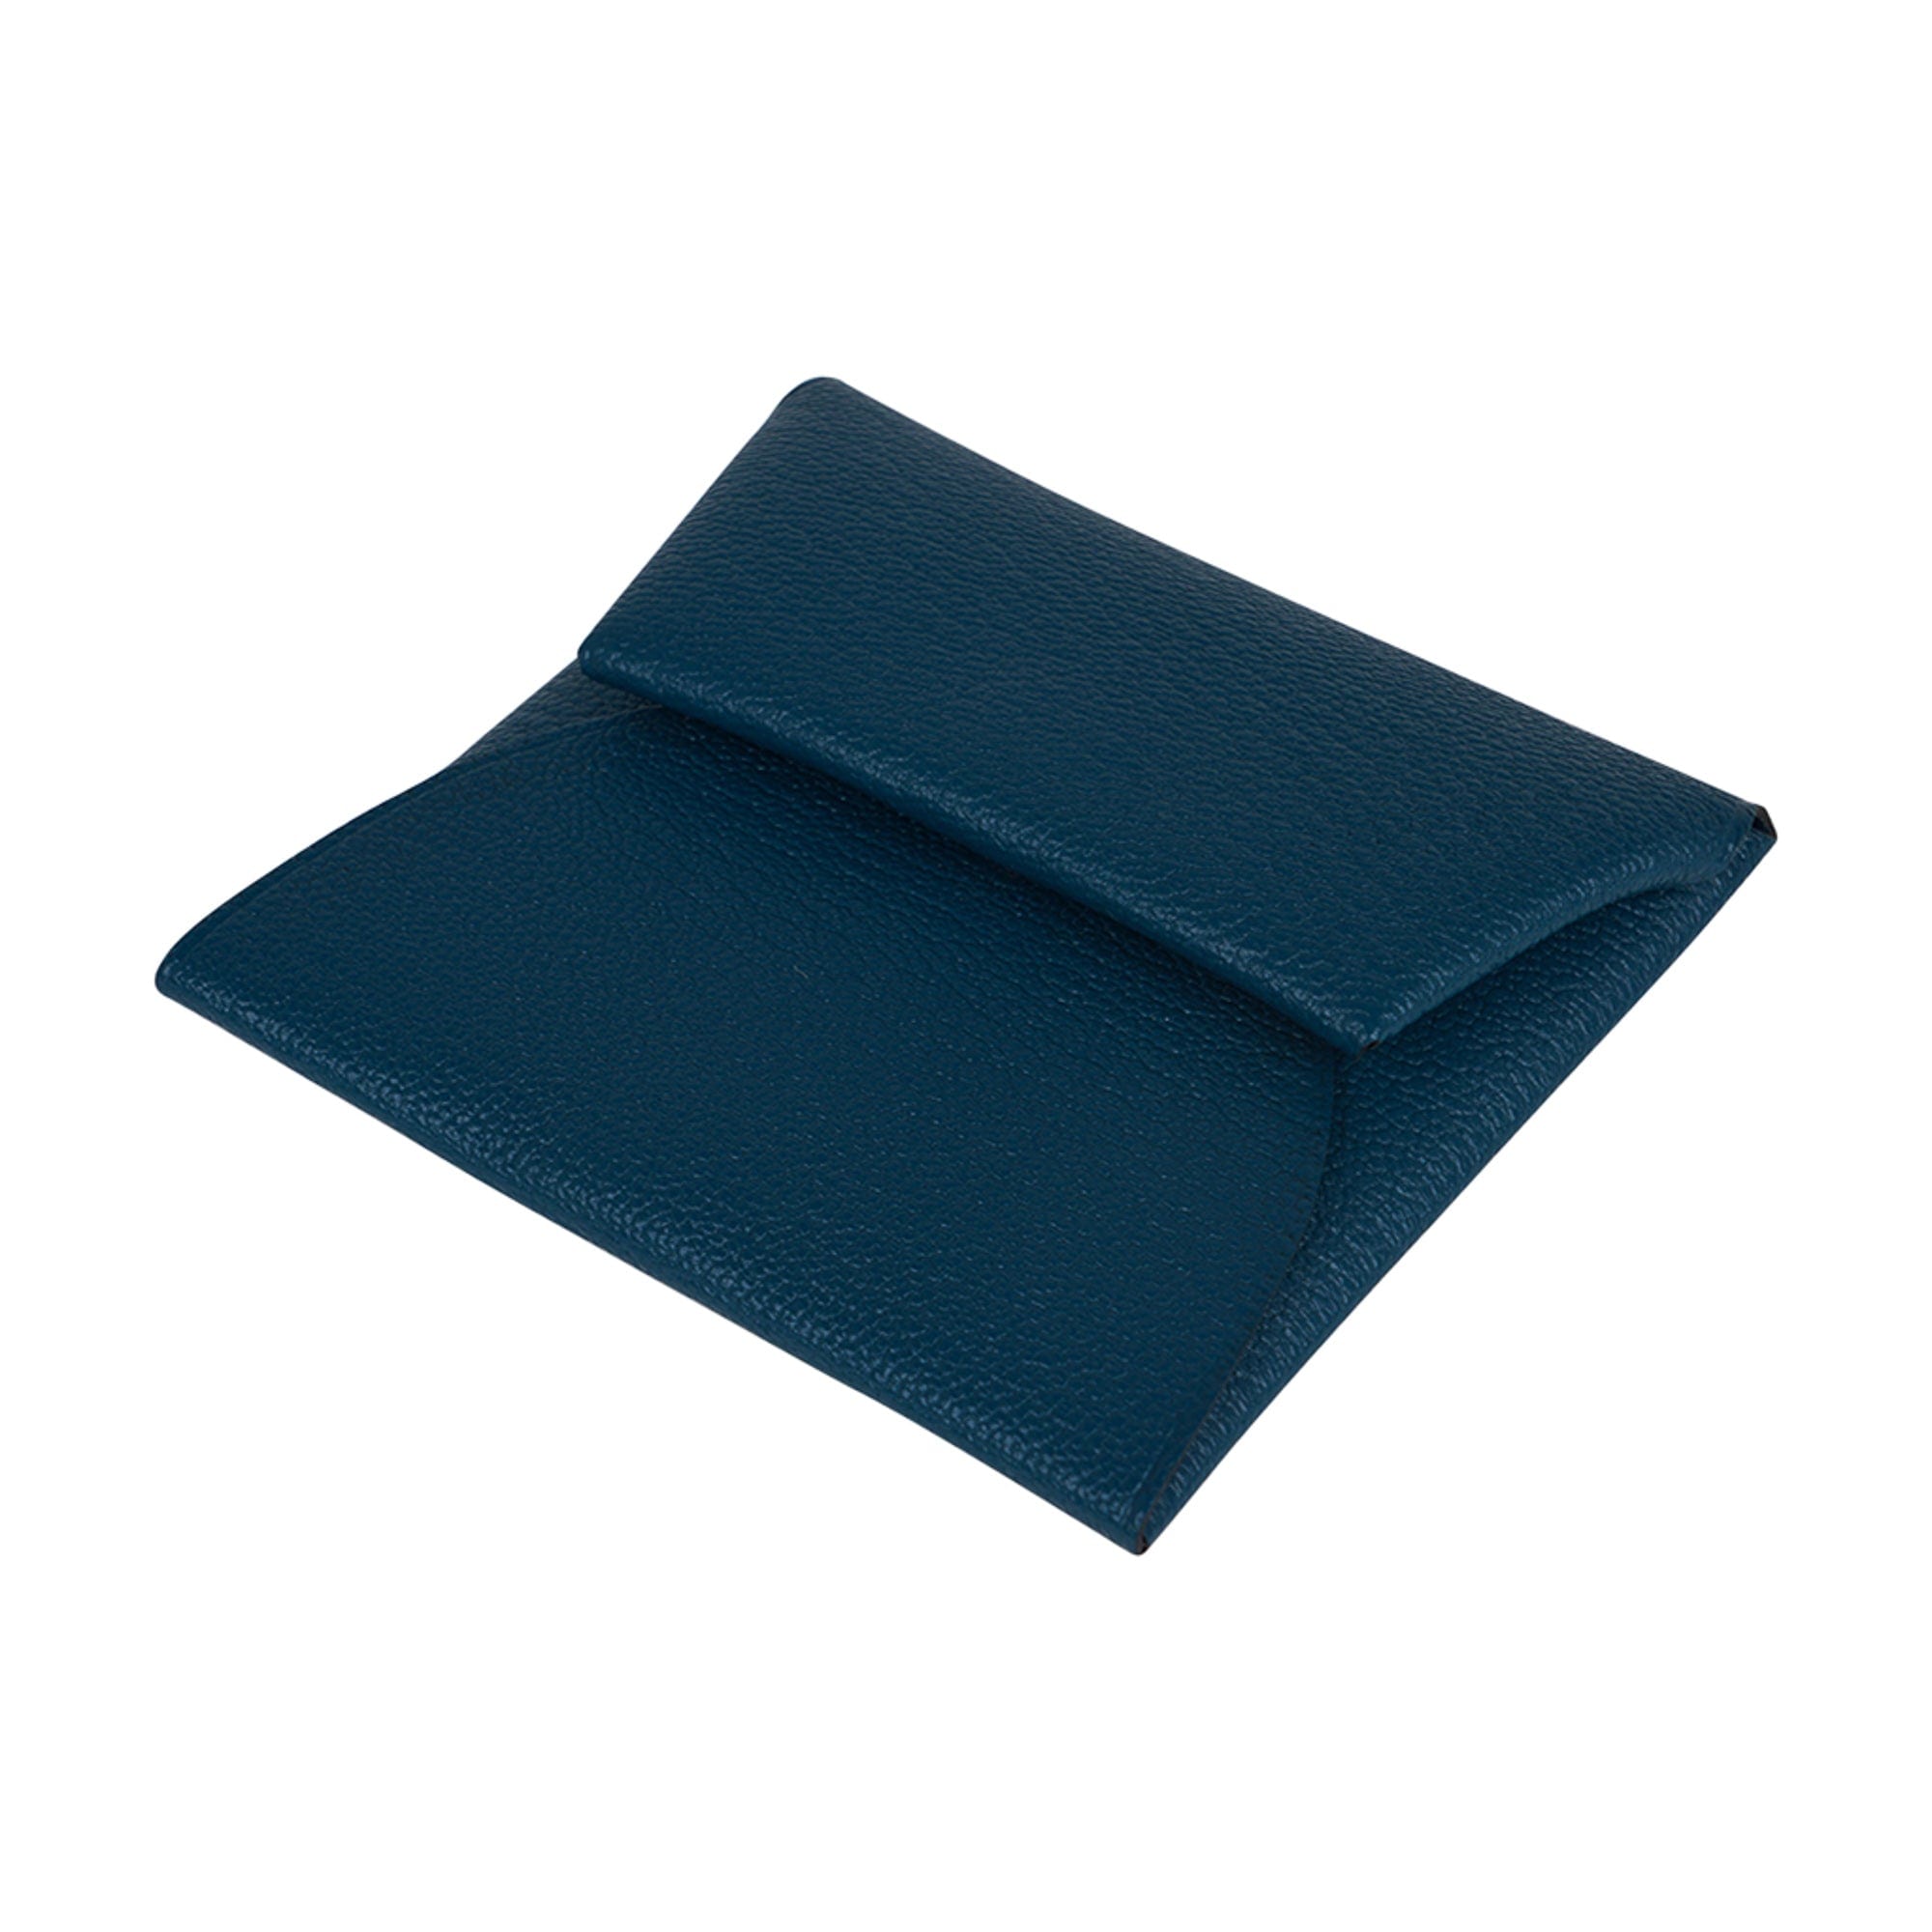 Hermes Bleu de France Evercolor Leather Bastia Change Purse